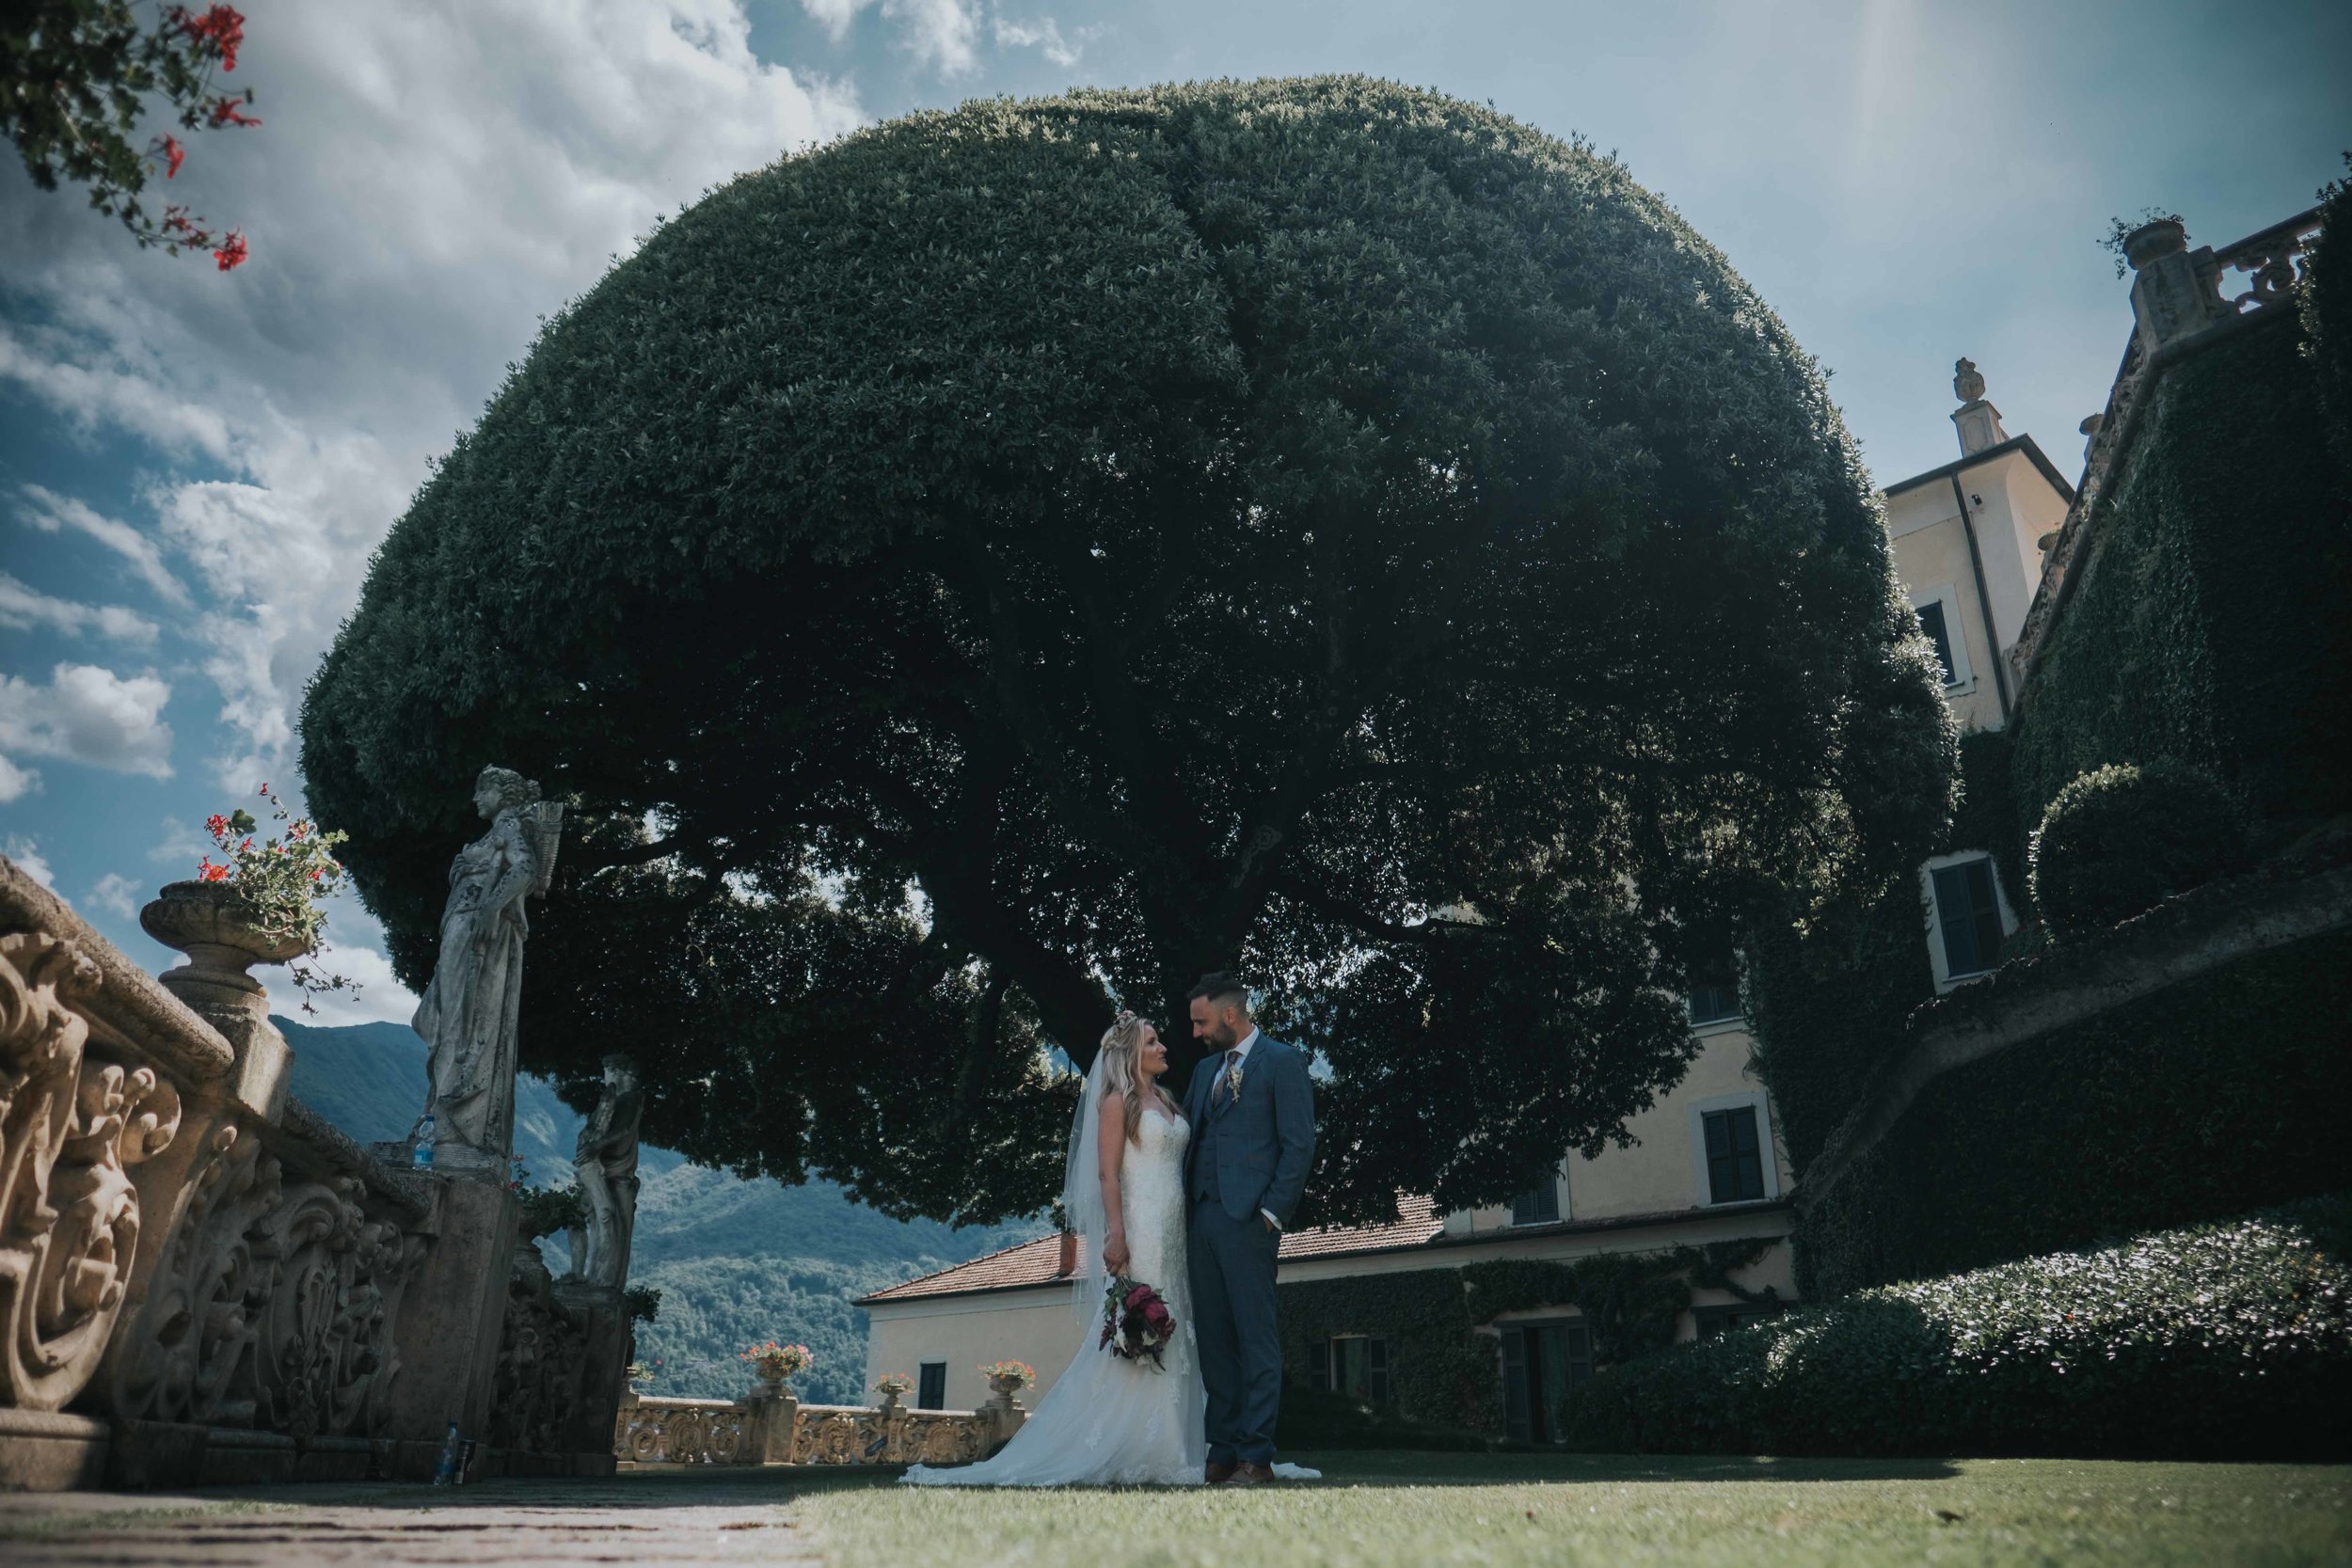 Laco Como Italy destination wedding photographer cheshire north west england documentry photography (63 of 117).jpg